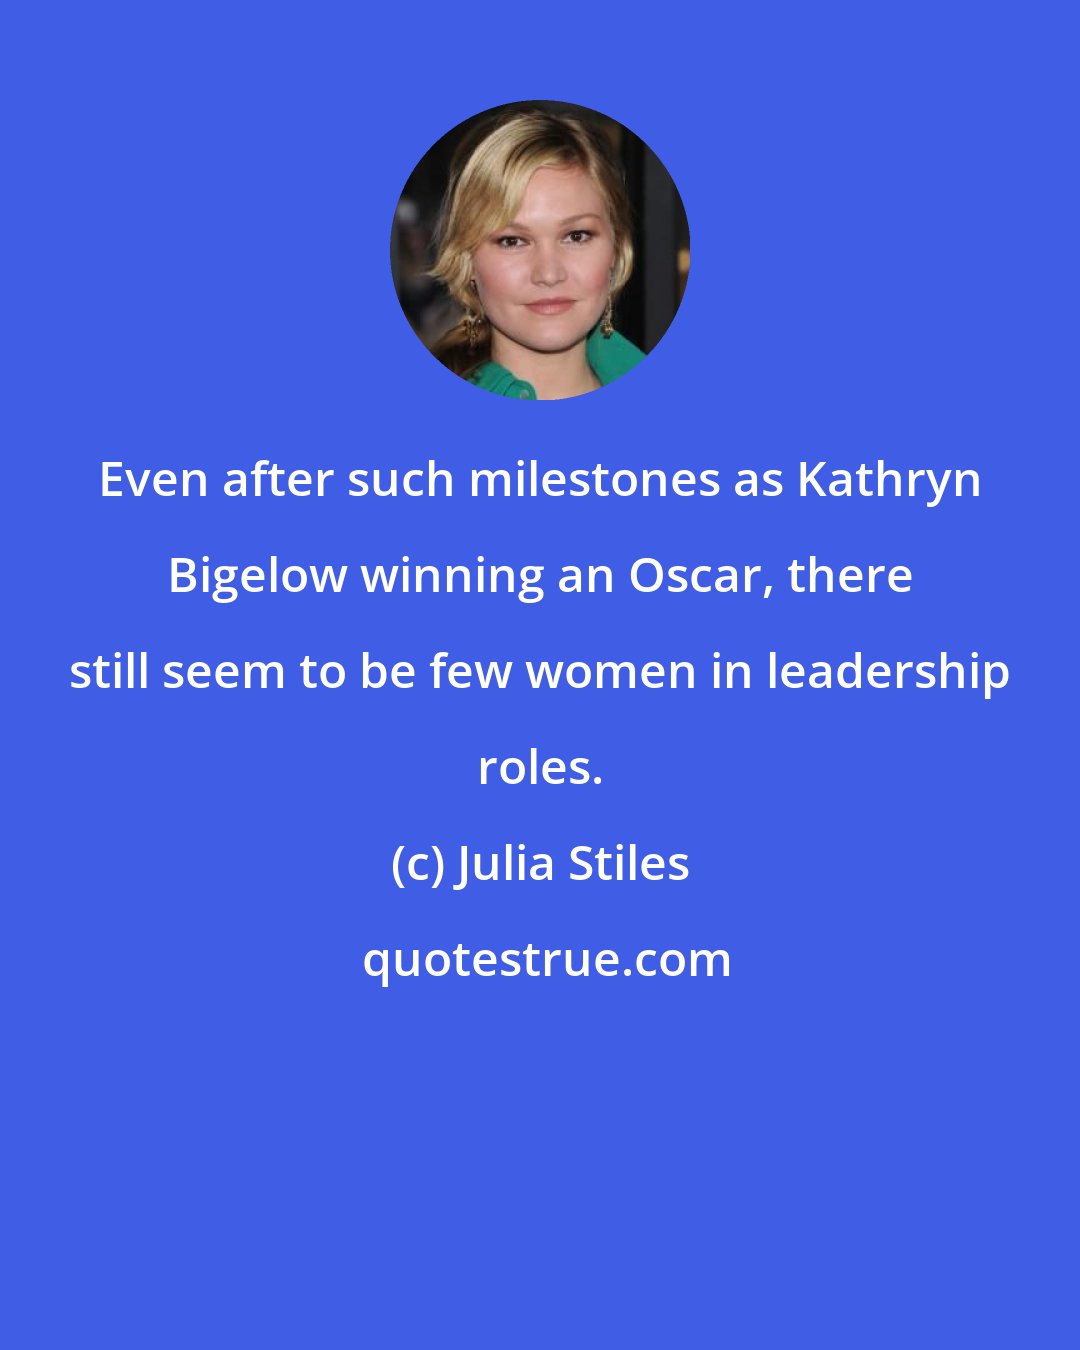 Julia Stiles: Even after such milestones as Kathryn Bigelow winning an Oscar, there still seem to be few women in leadership roles.